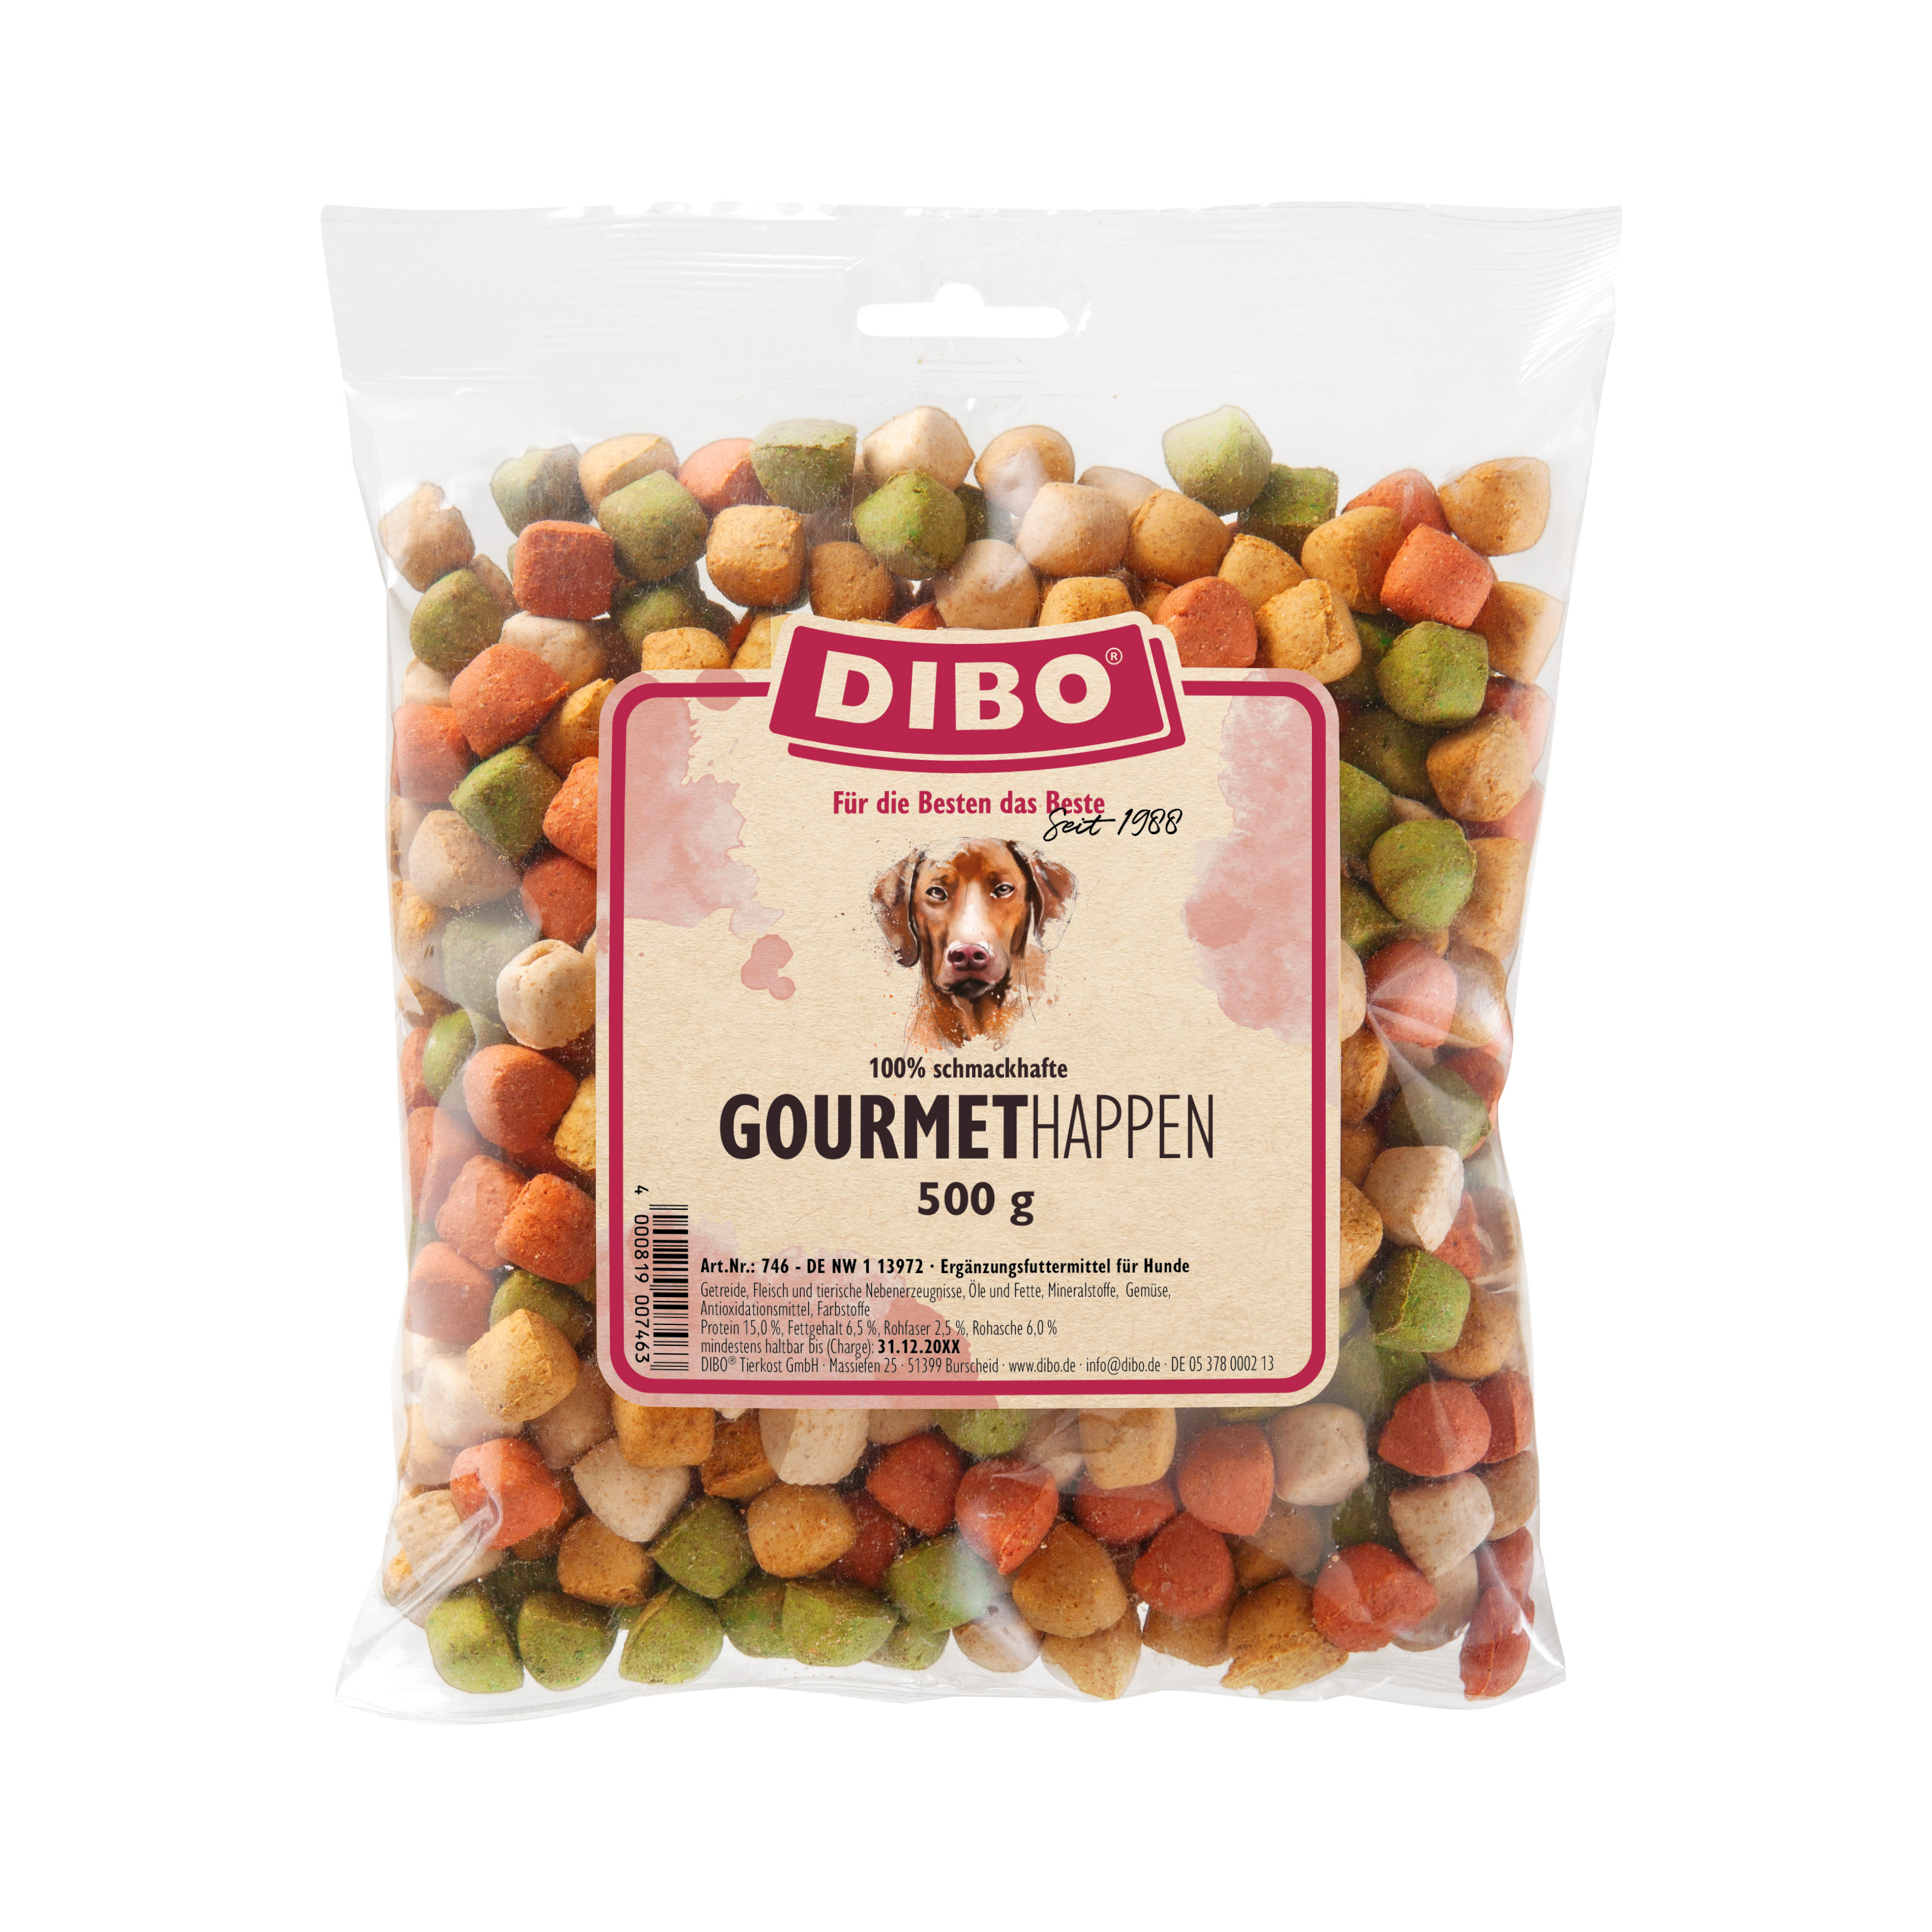 DIBO Gourmet-Happen, 500g-Beutel